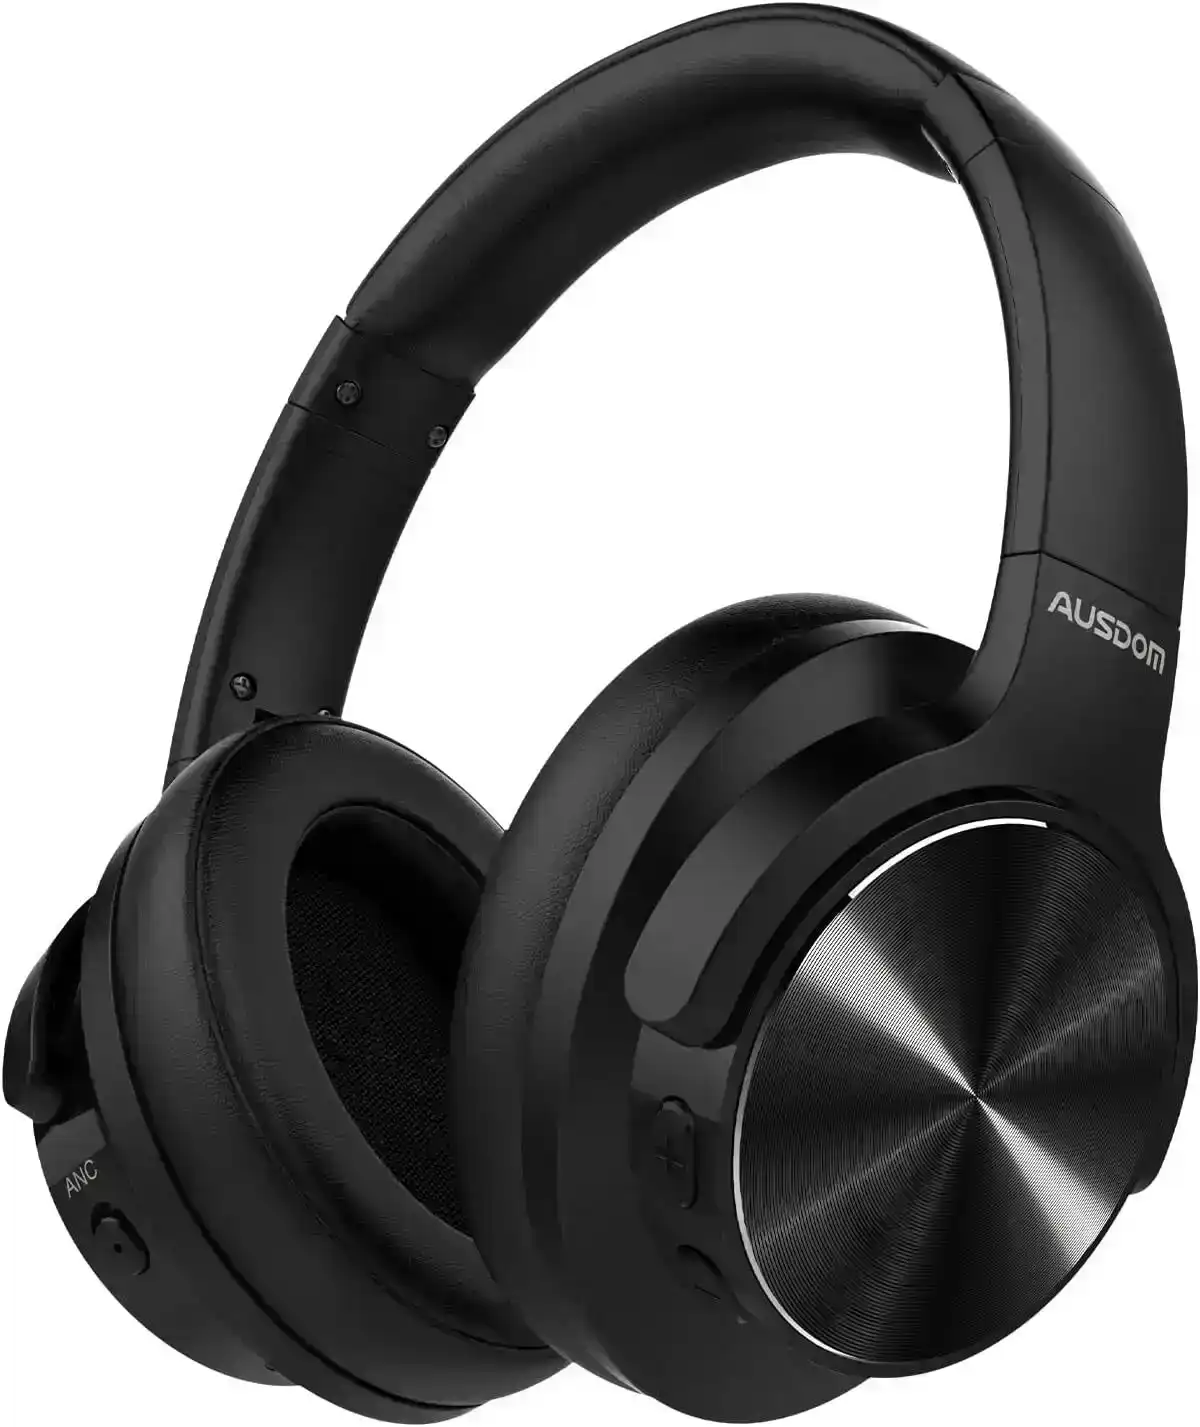 Ausdom E9 Active Noise Cancelling Headphones Wireless Bluetooth Foldable Over Ear Headphones